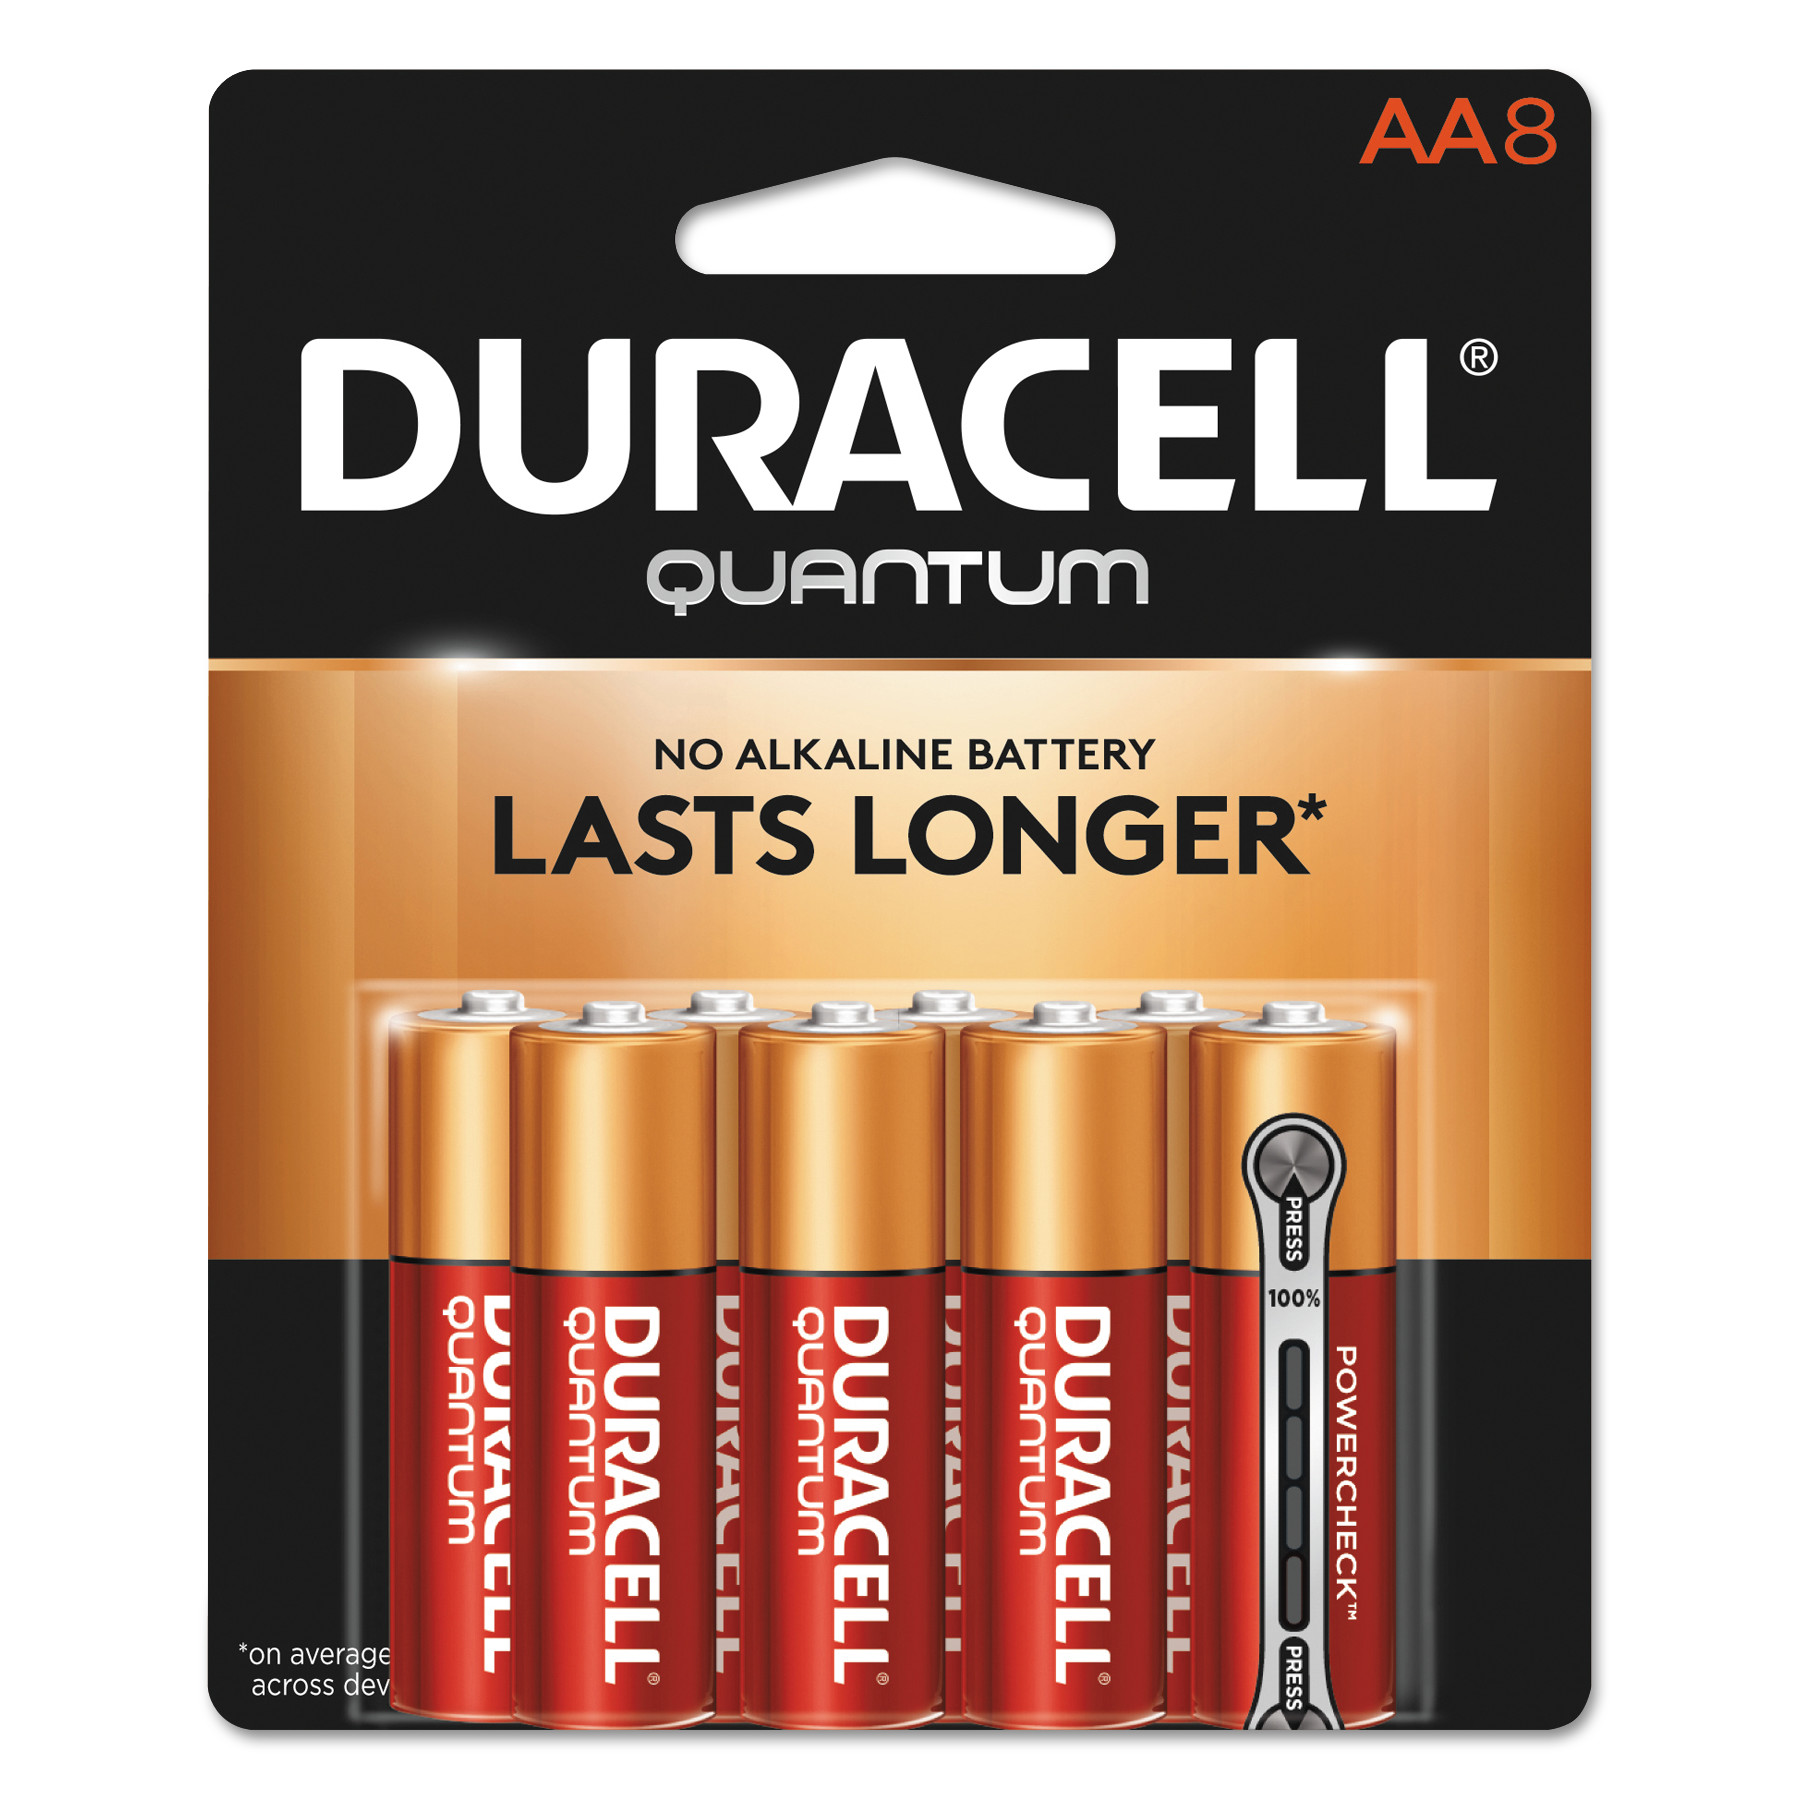  Duracell QU1500B8Z Quantum Alkaline AA Batteries, 8/Pack (DURQU1500B8Z) 